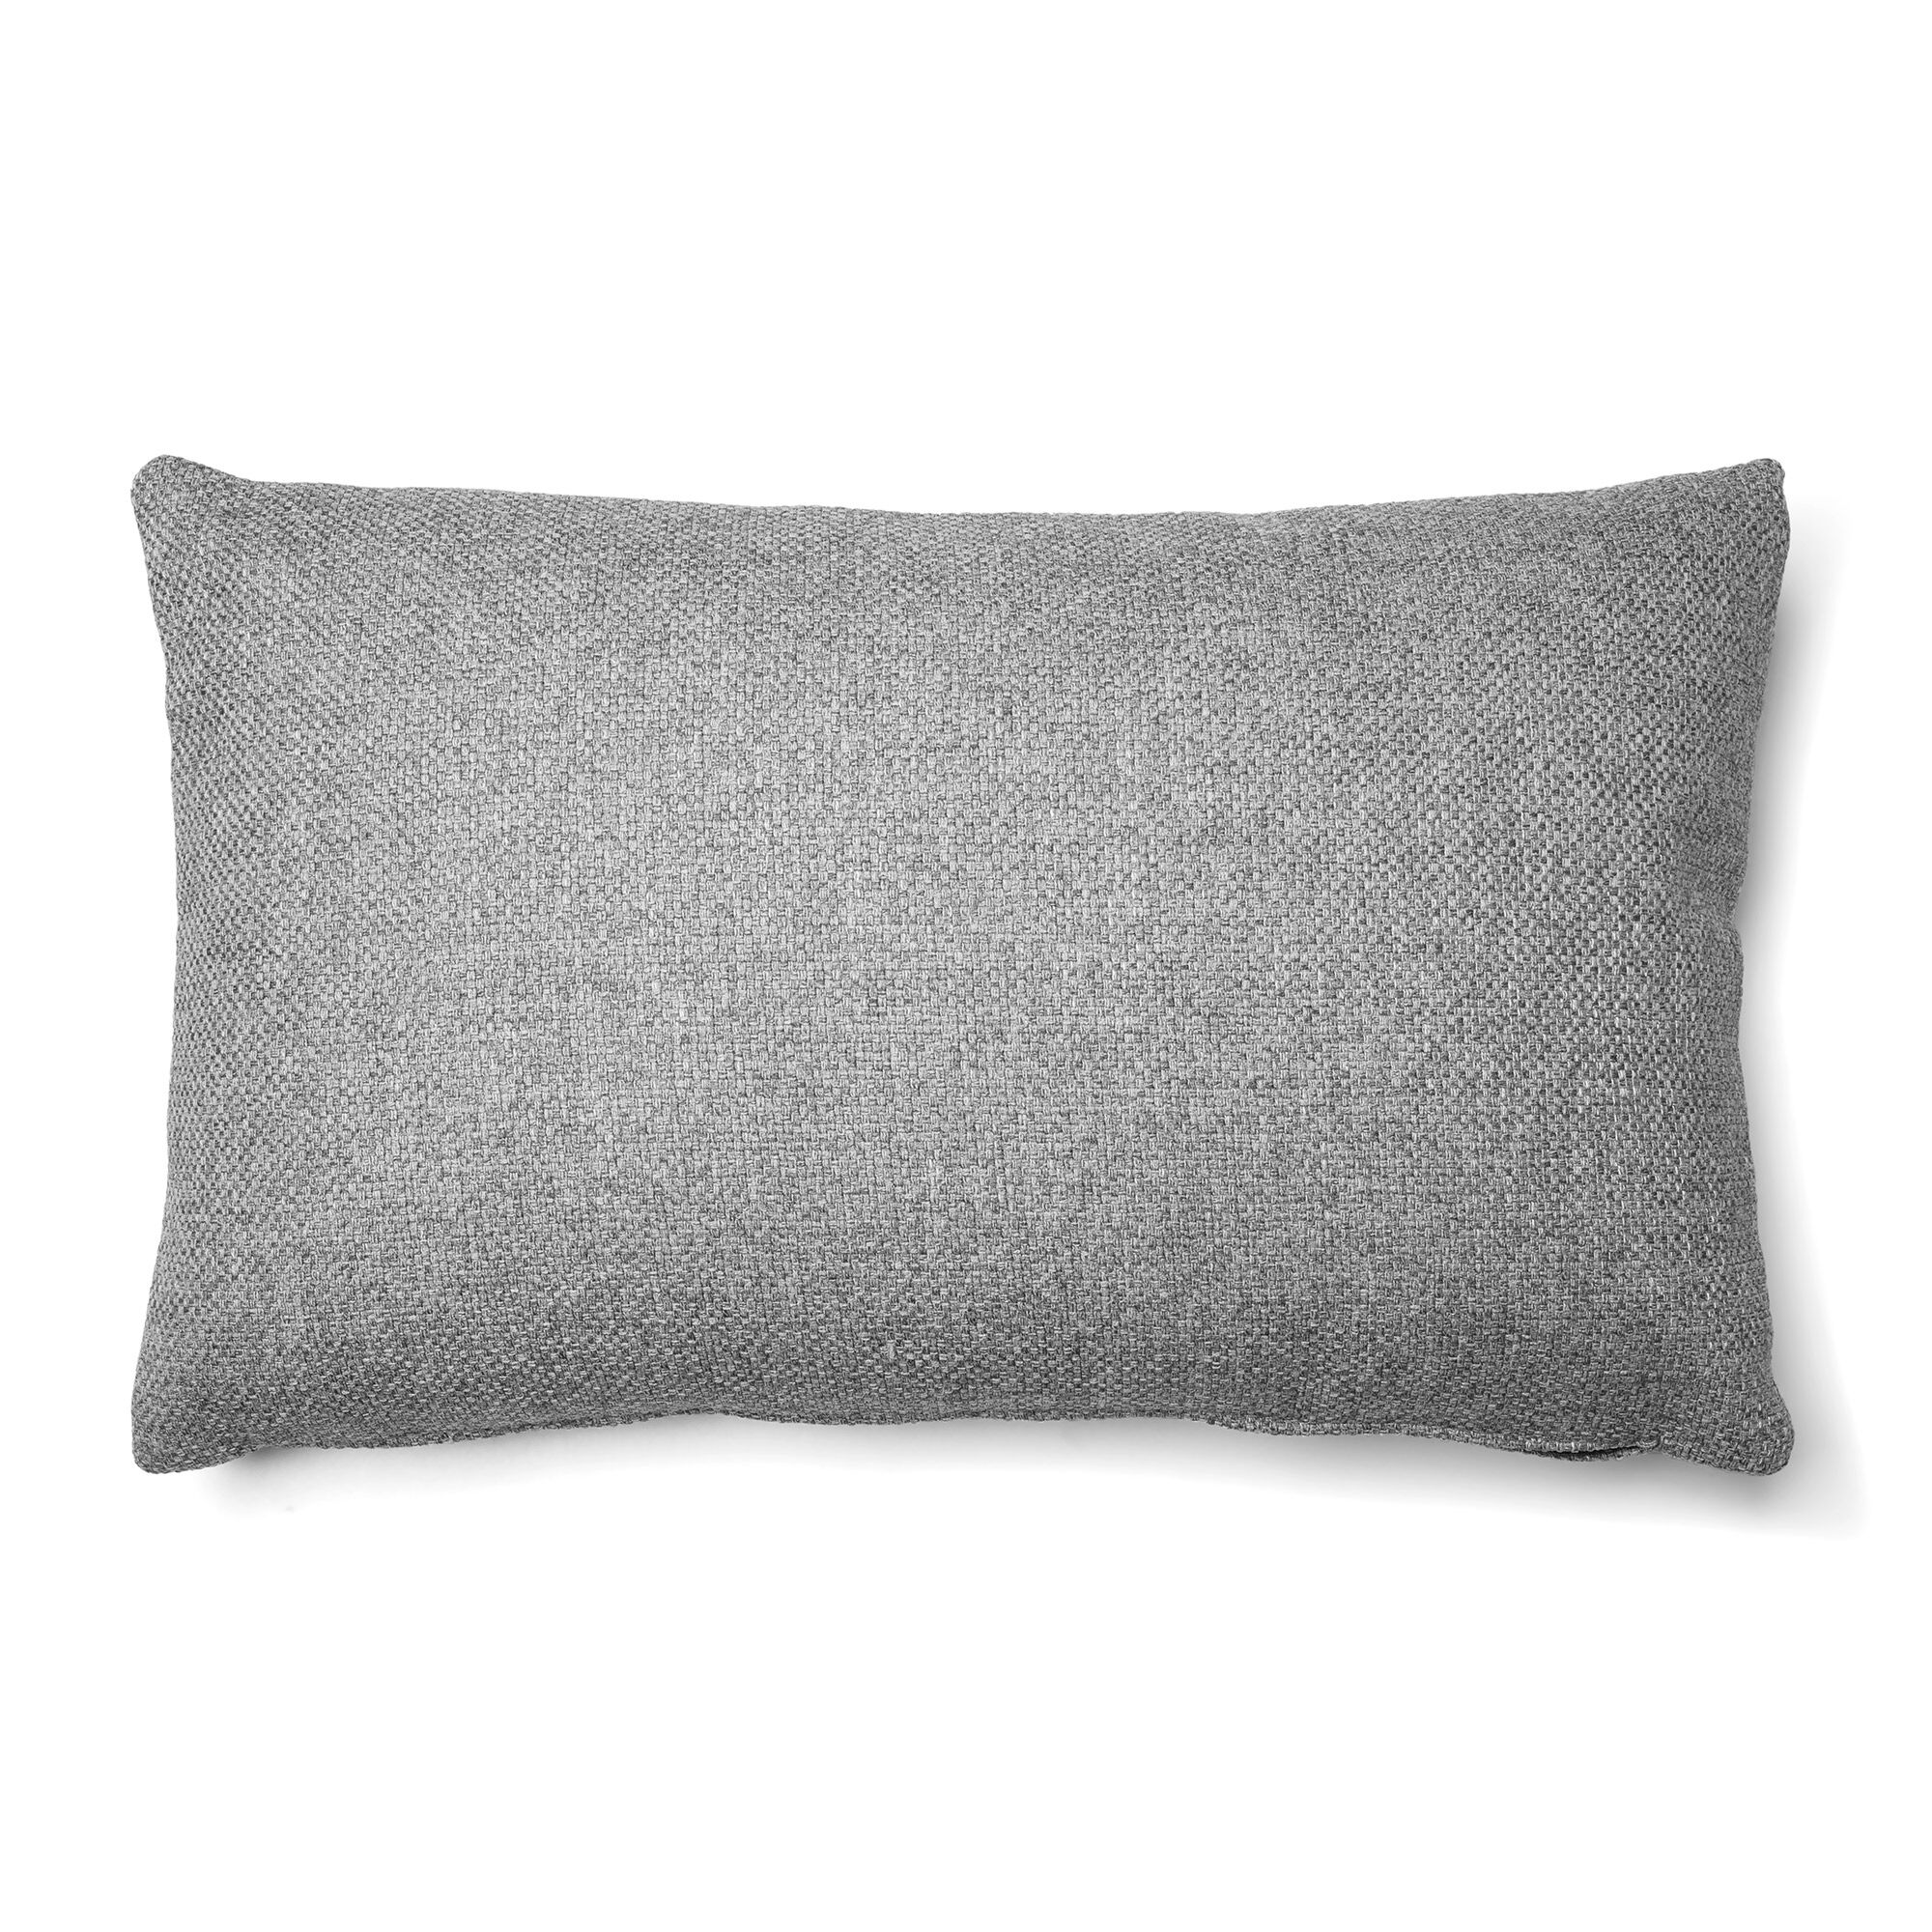 Kave Home Fodera per cuscino Kam 30 x 50 cm chrono grigio chiaro